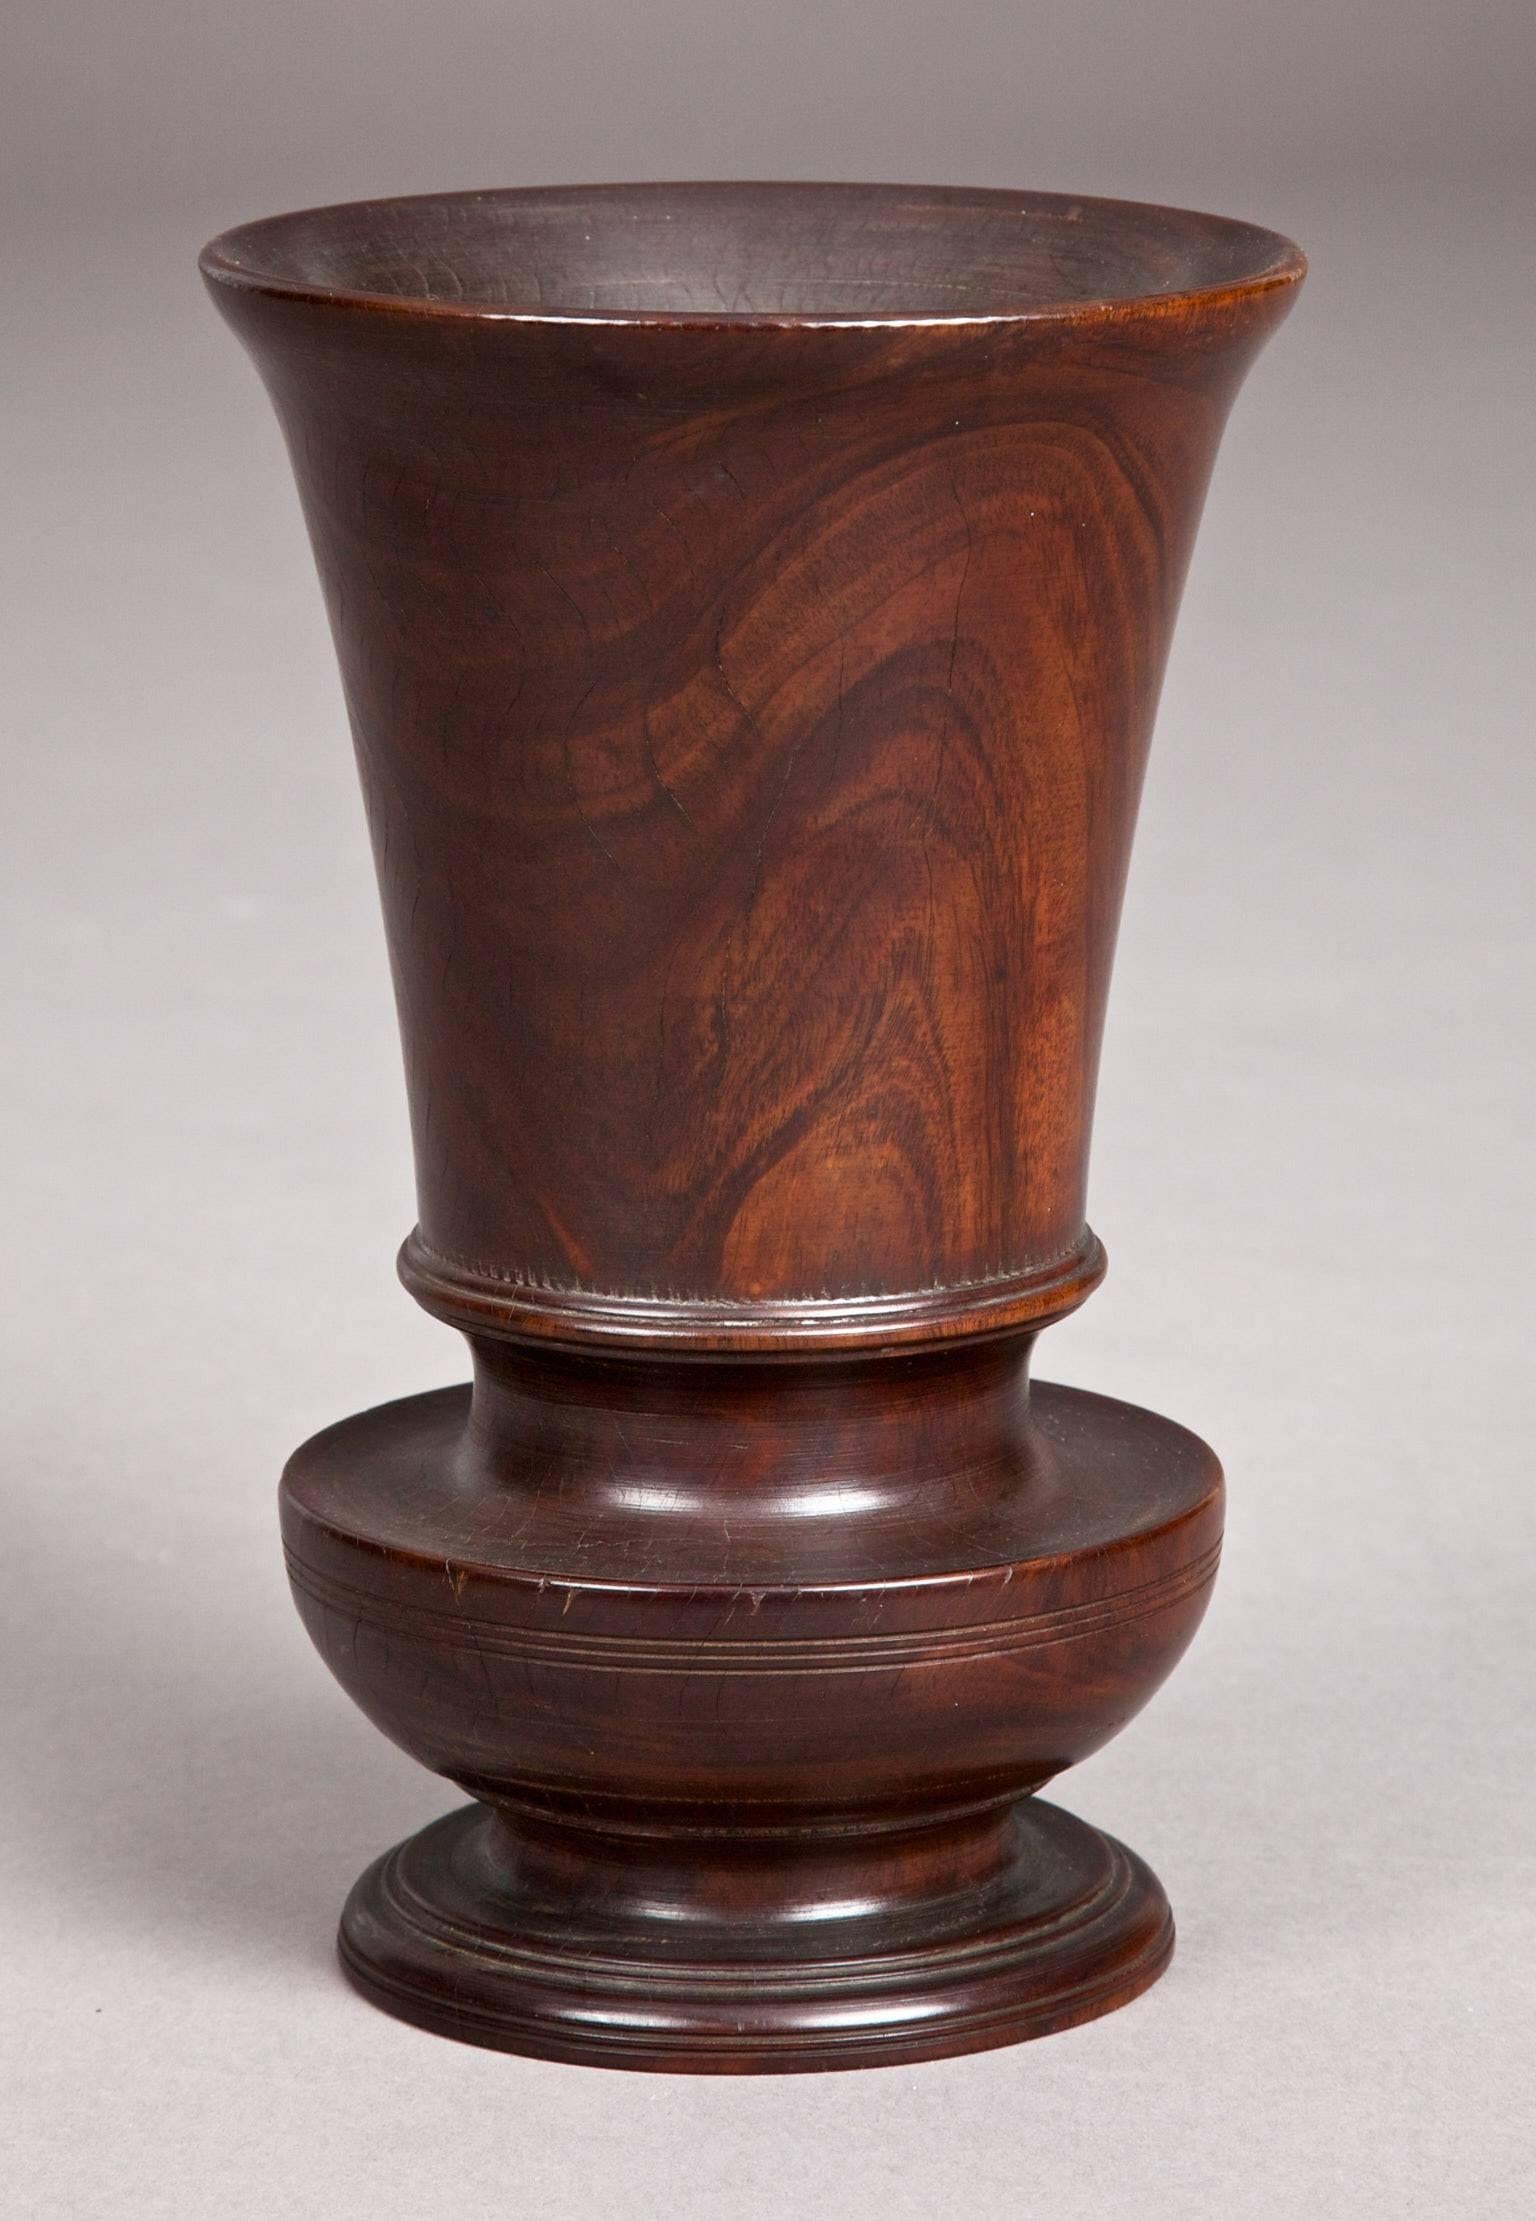 English Lignum Vitae Late 19th Century Vase or Urn For Sale